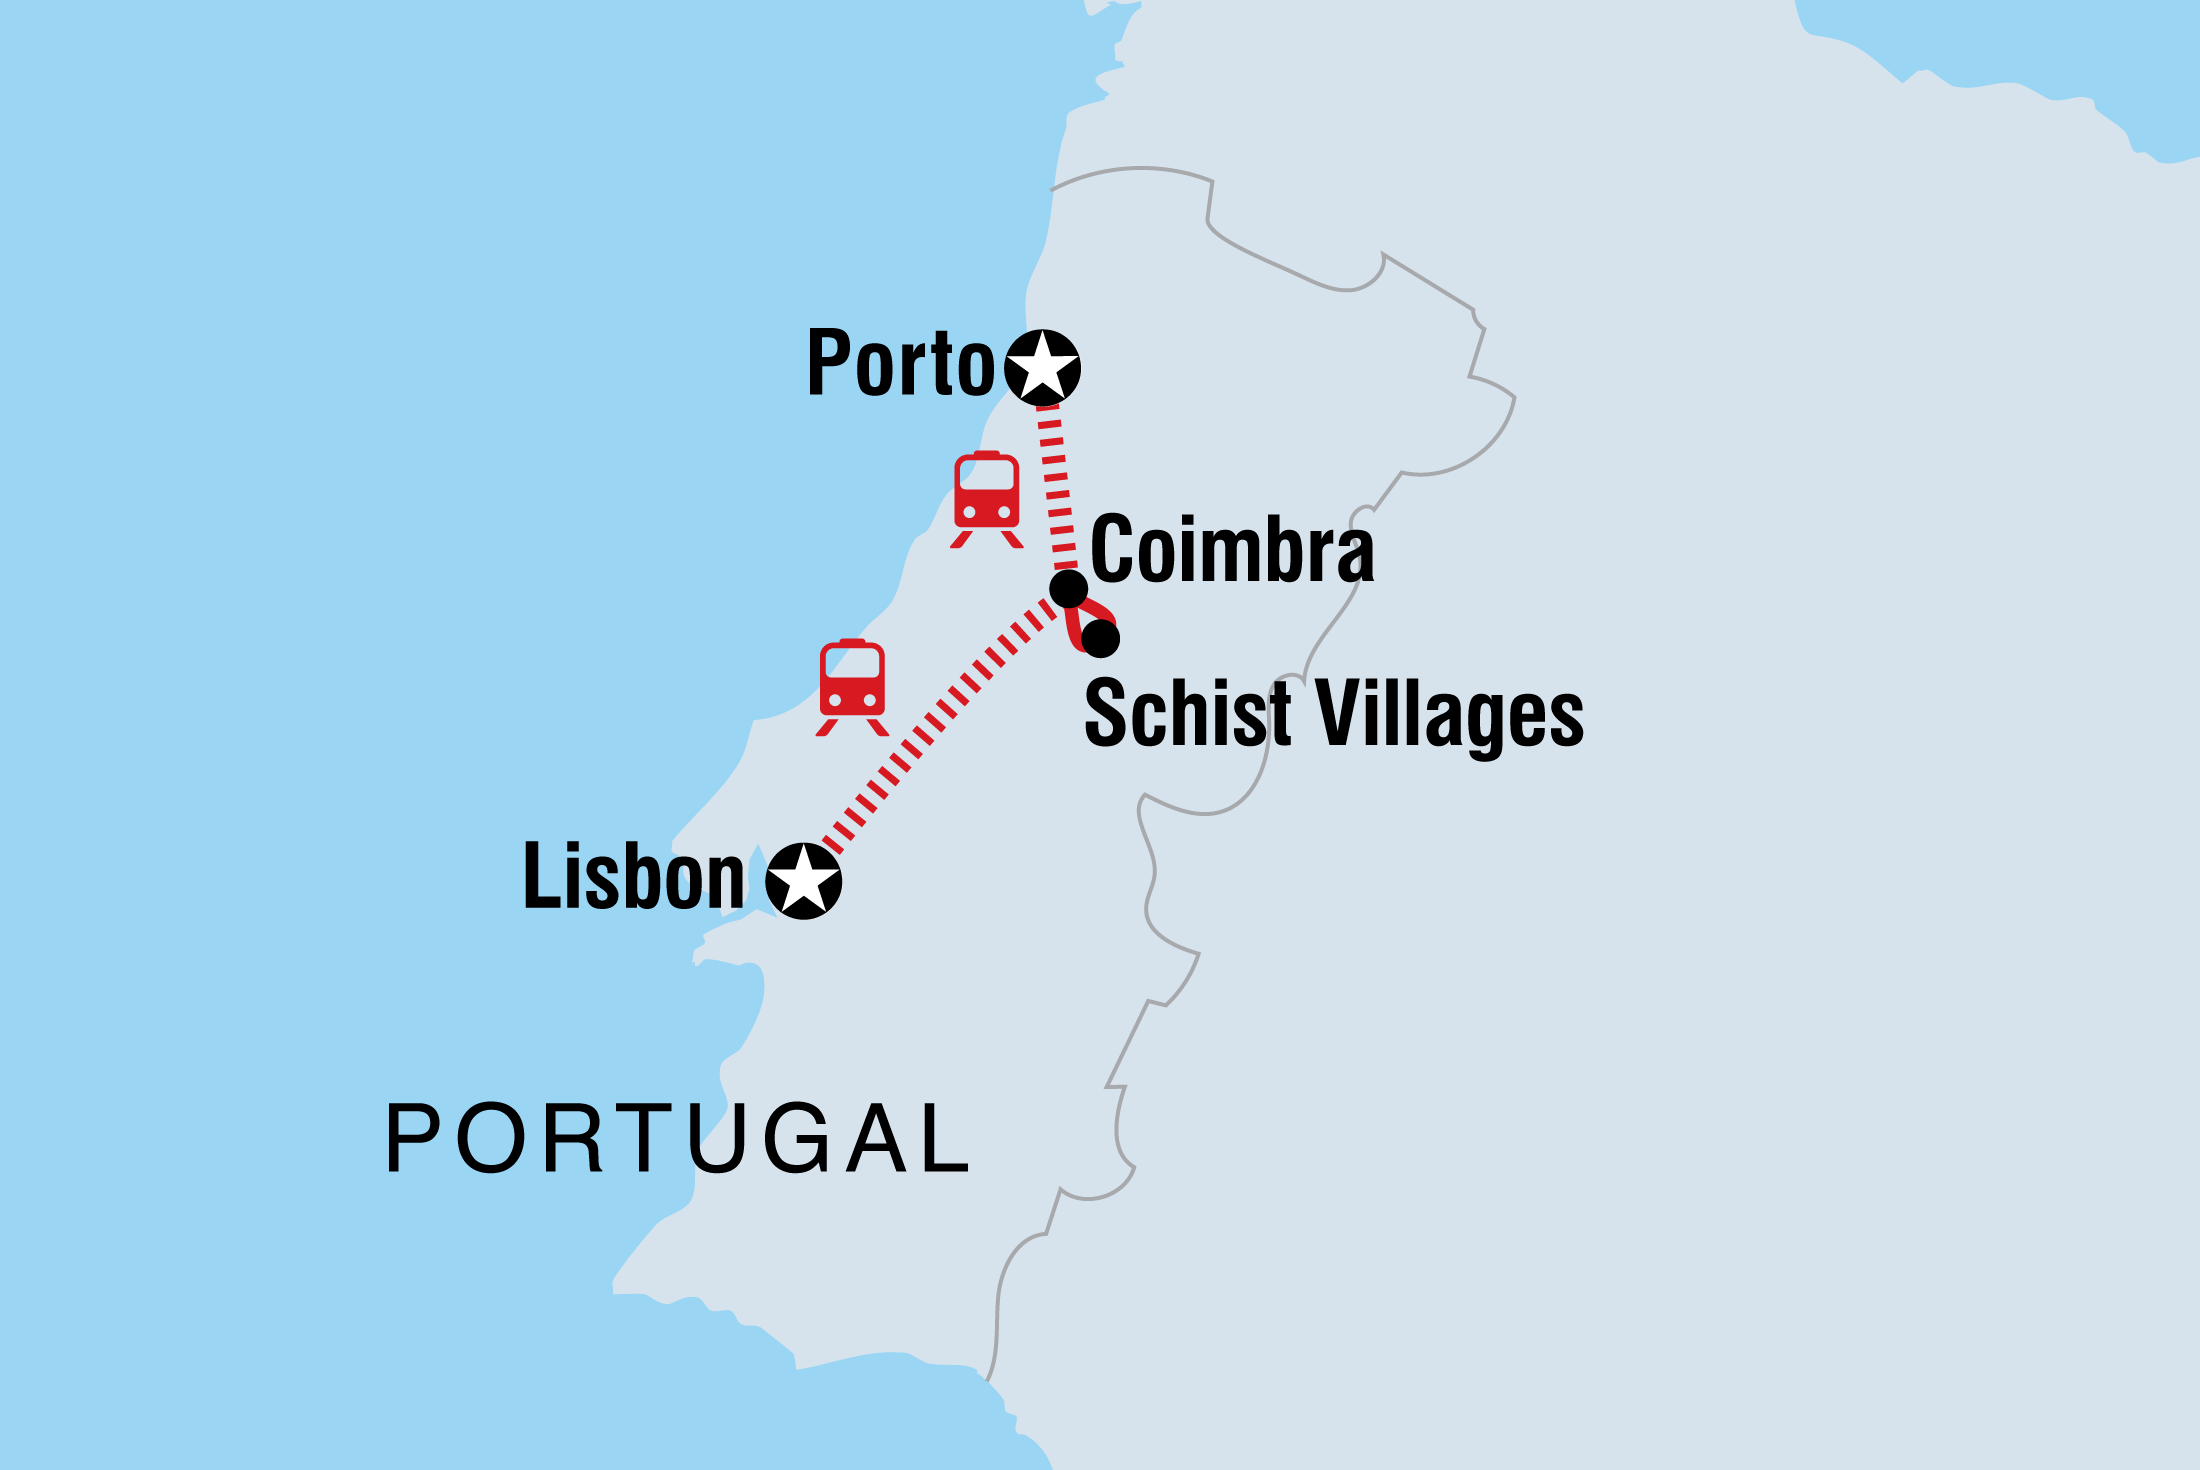 tourhub | Intrepid Travel | Highlights of Portugal  | Tour Map